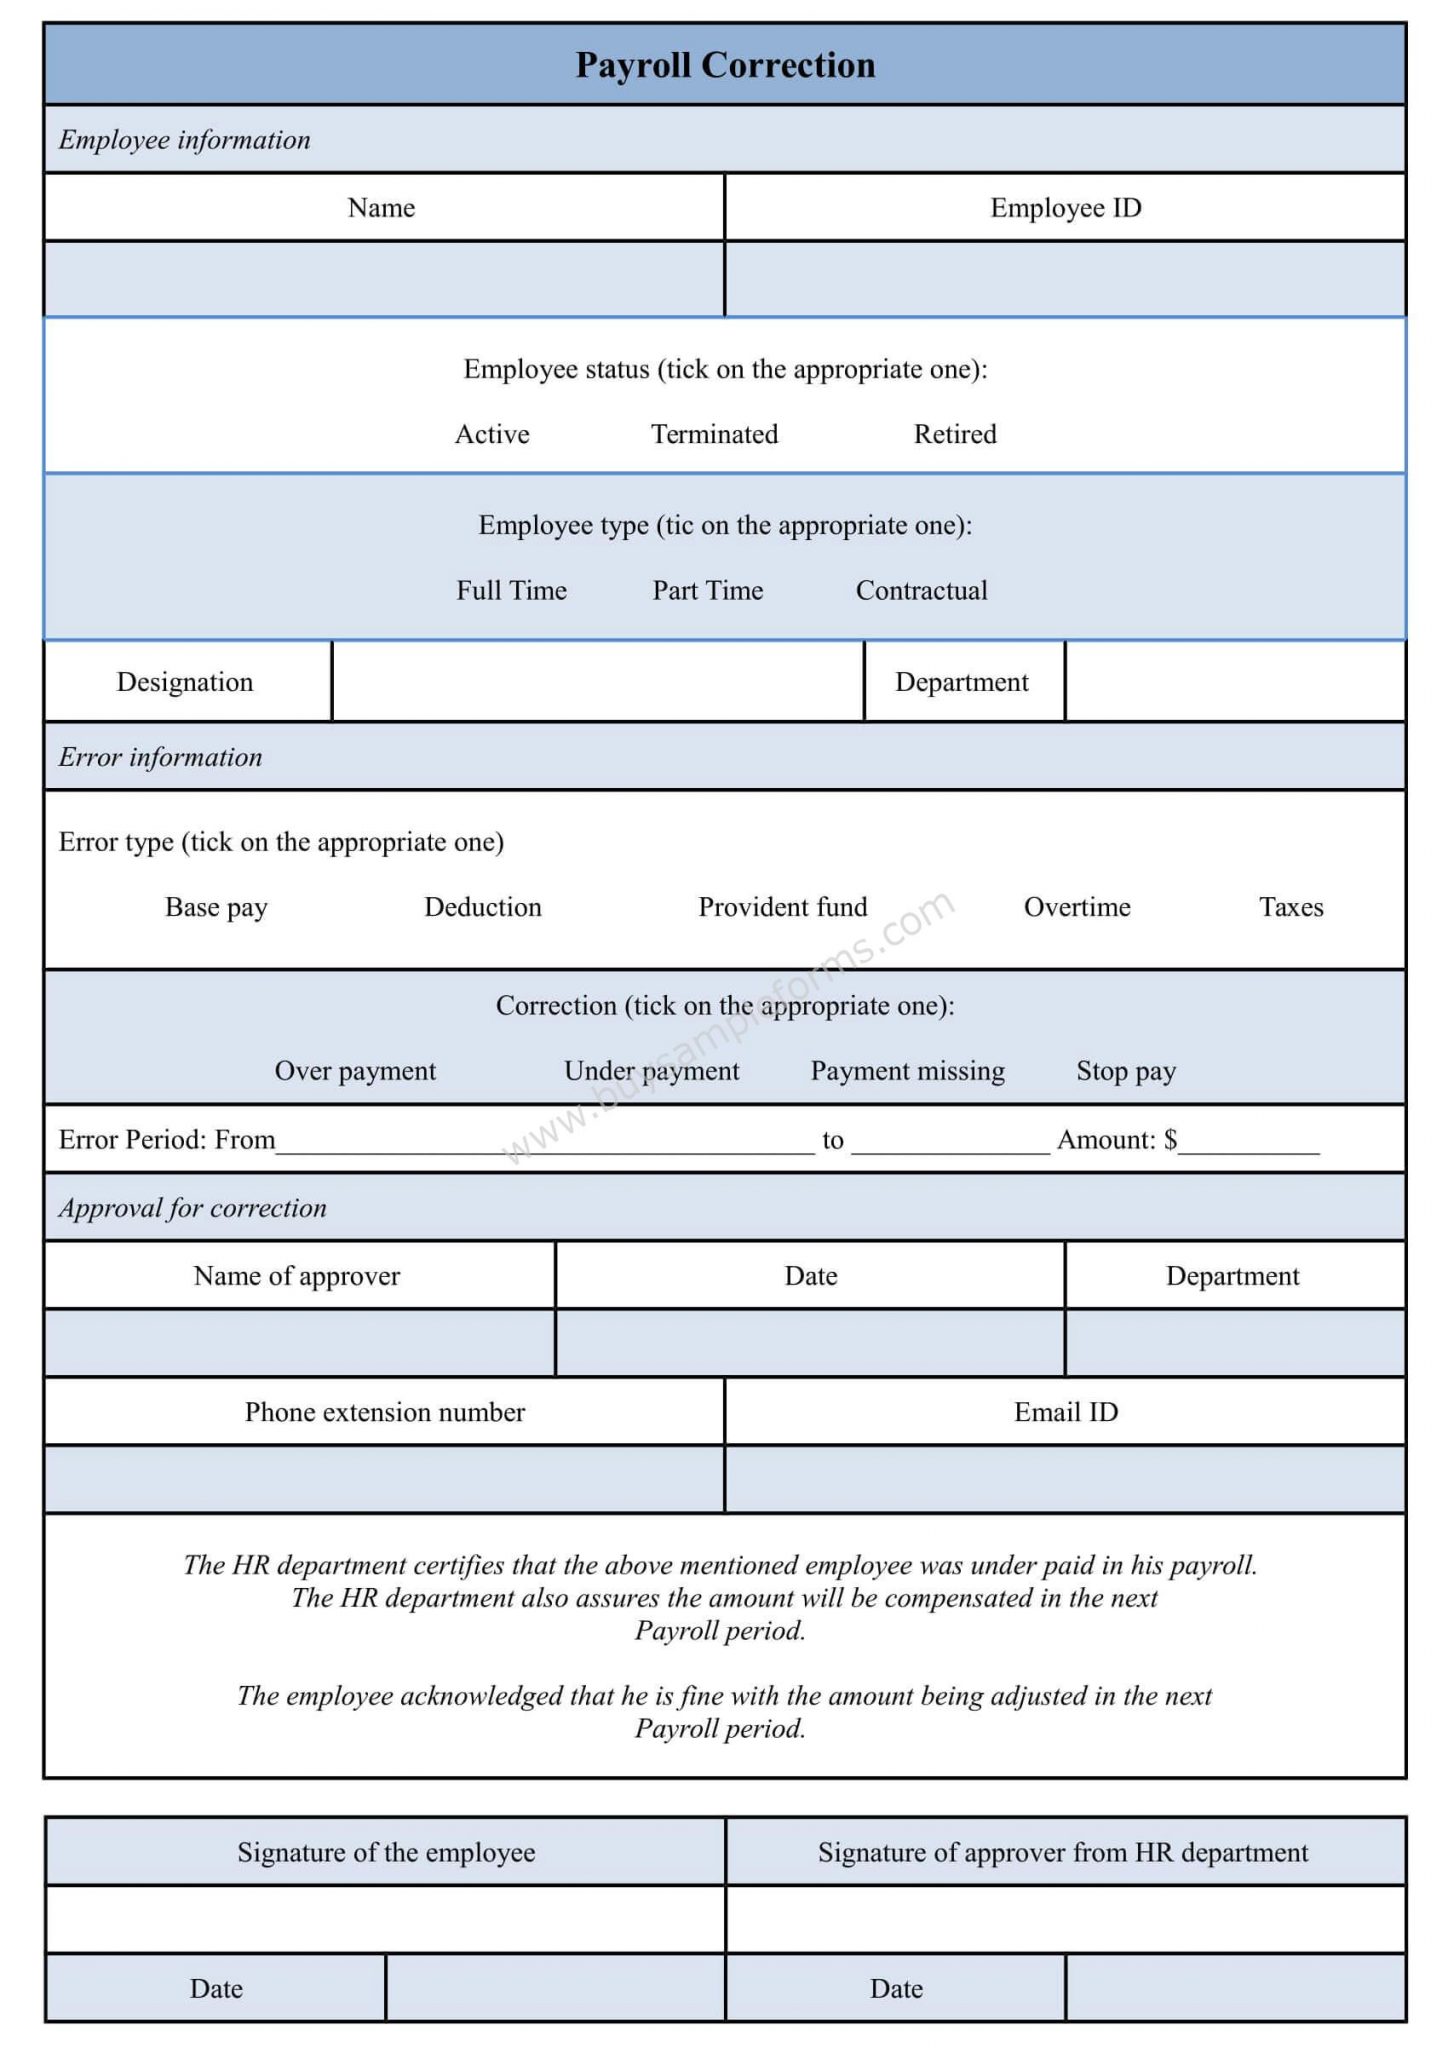 Payroll Correction Form Template, Sample Payroll Correction Form